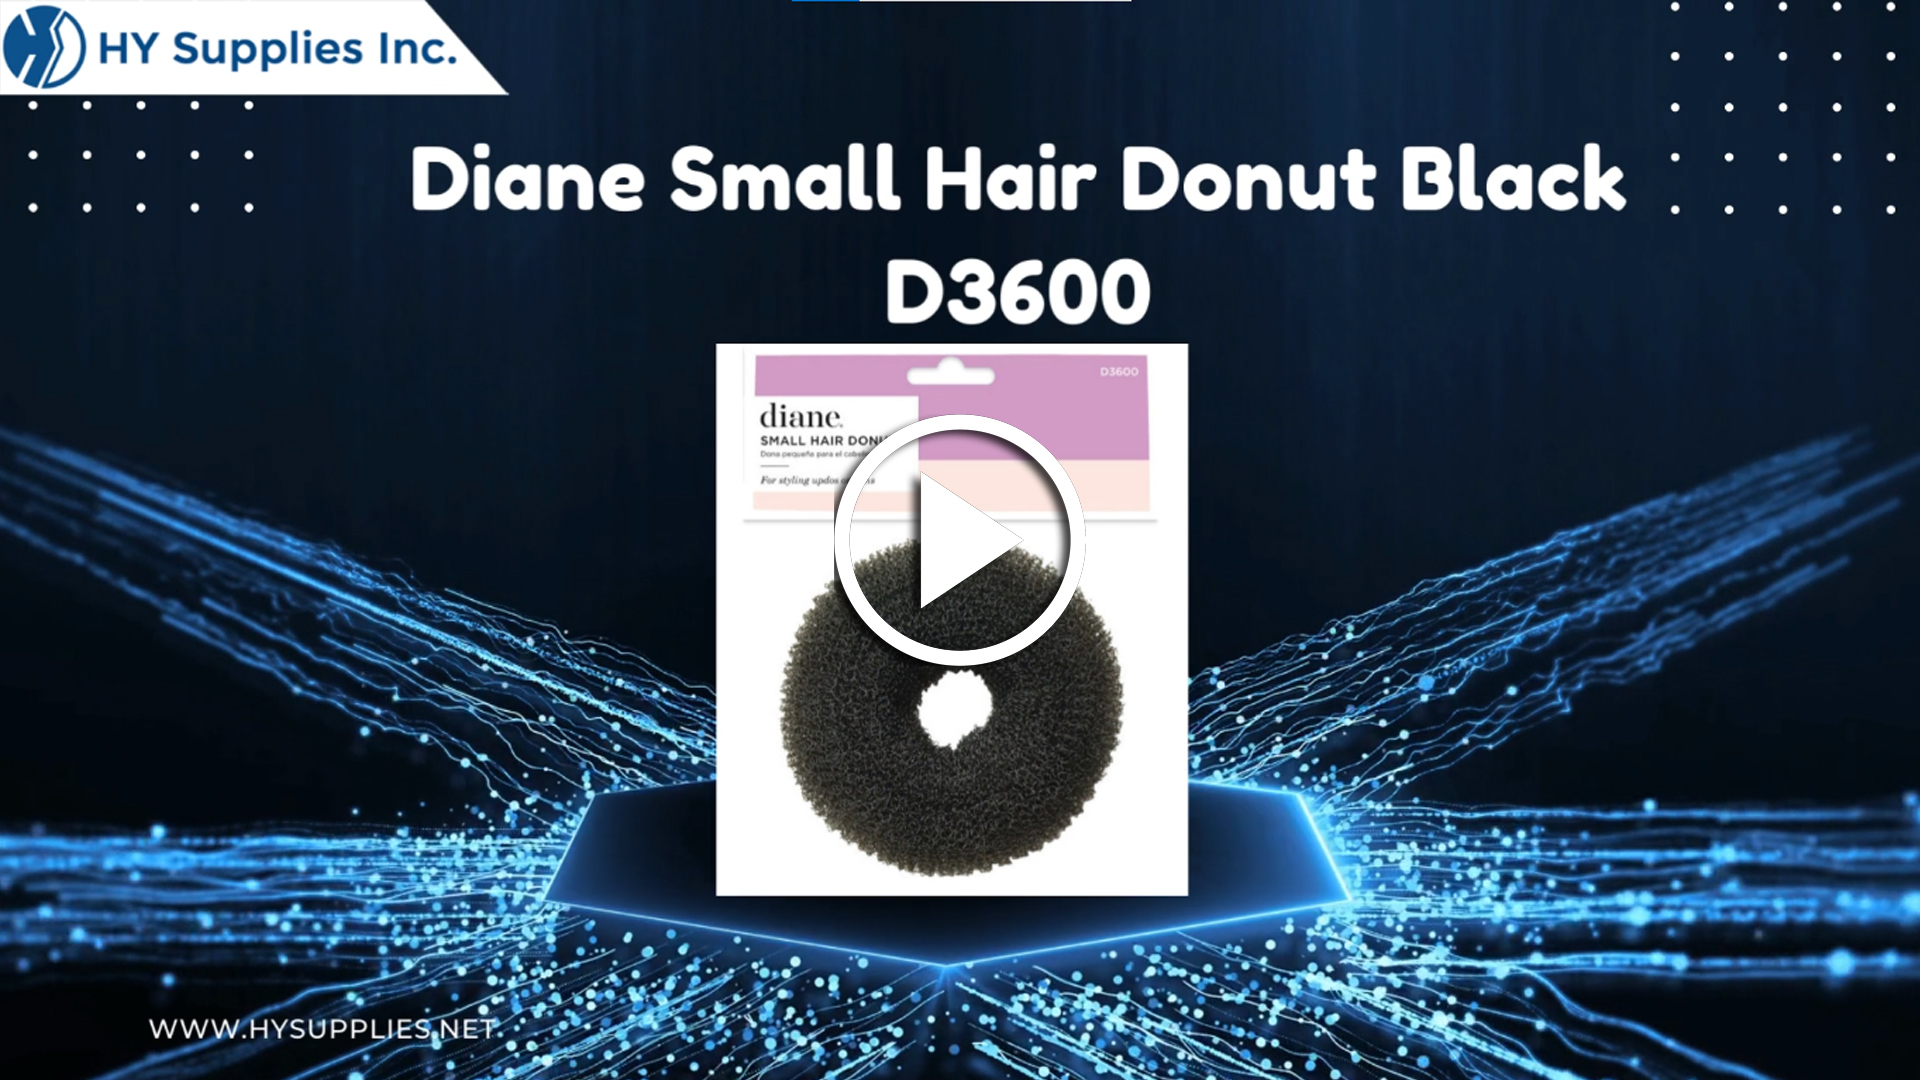 Diane Small Hair Donut Black D3600